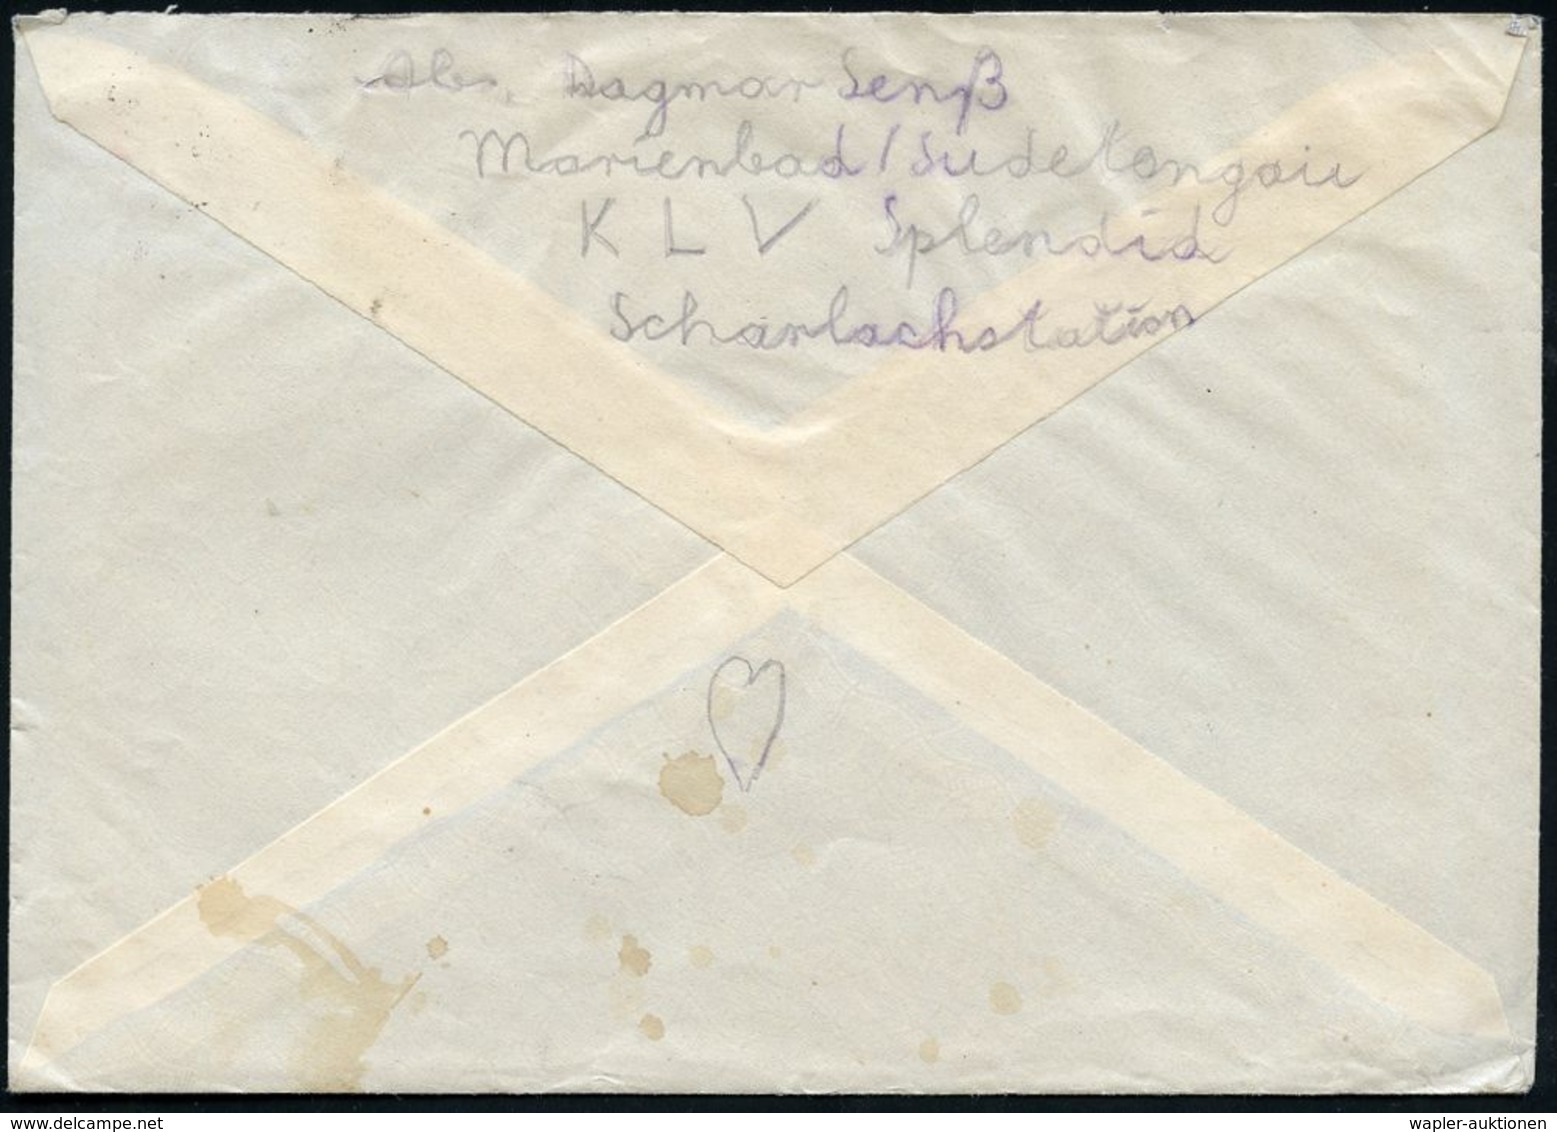 KINDERLANDVERSCHICKUNG (KLV) / KLV-LAGER : MARIENBAD 1/ F 1941 (22.11.) 2K-Steg + Viol. 3L: K L V - Lager/Hotel Splendid - WW2